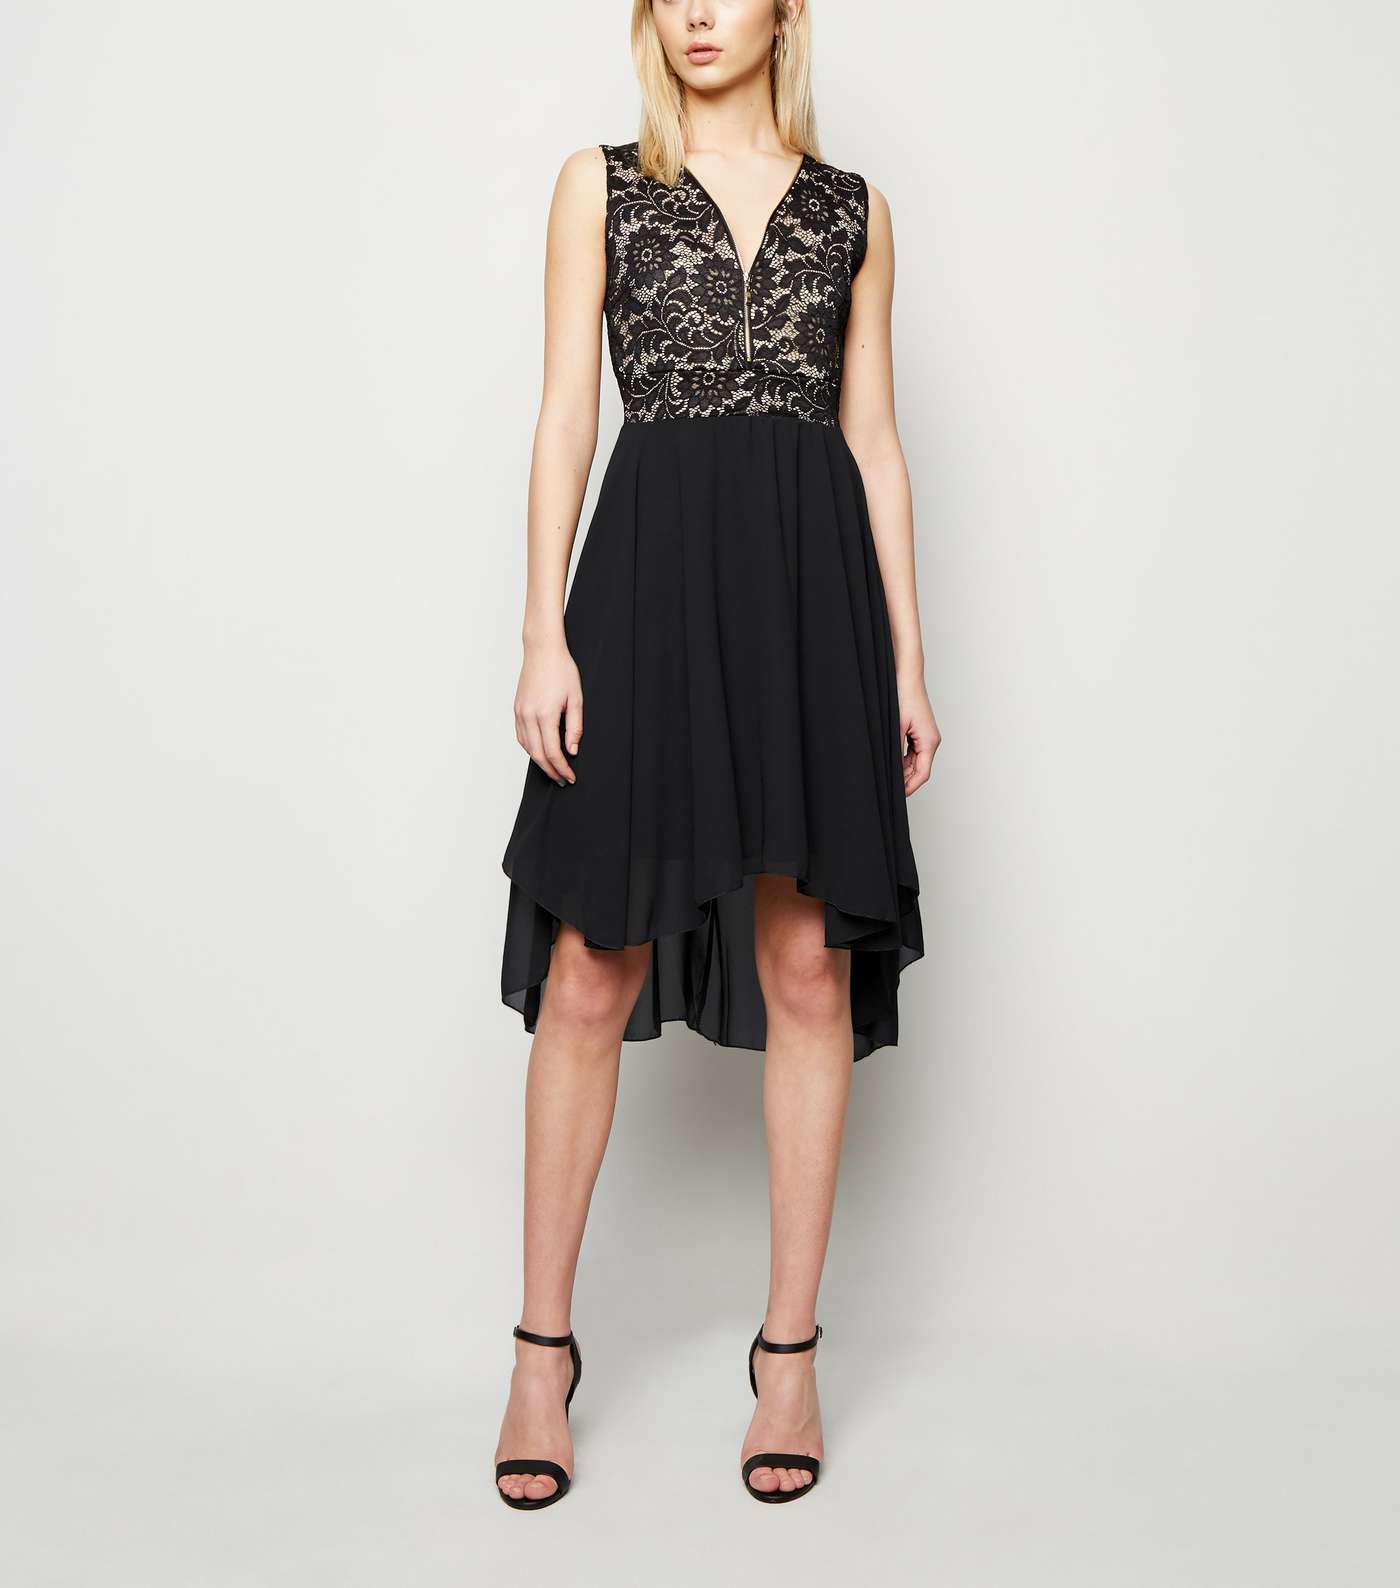 Mela Black Lace Zip Dip Hem Dress Image 2